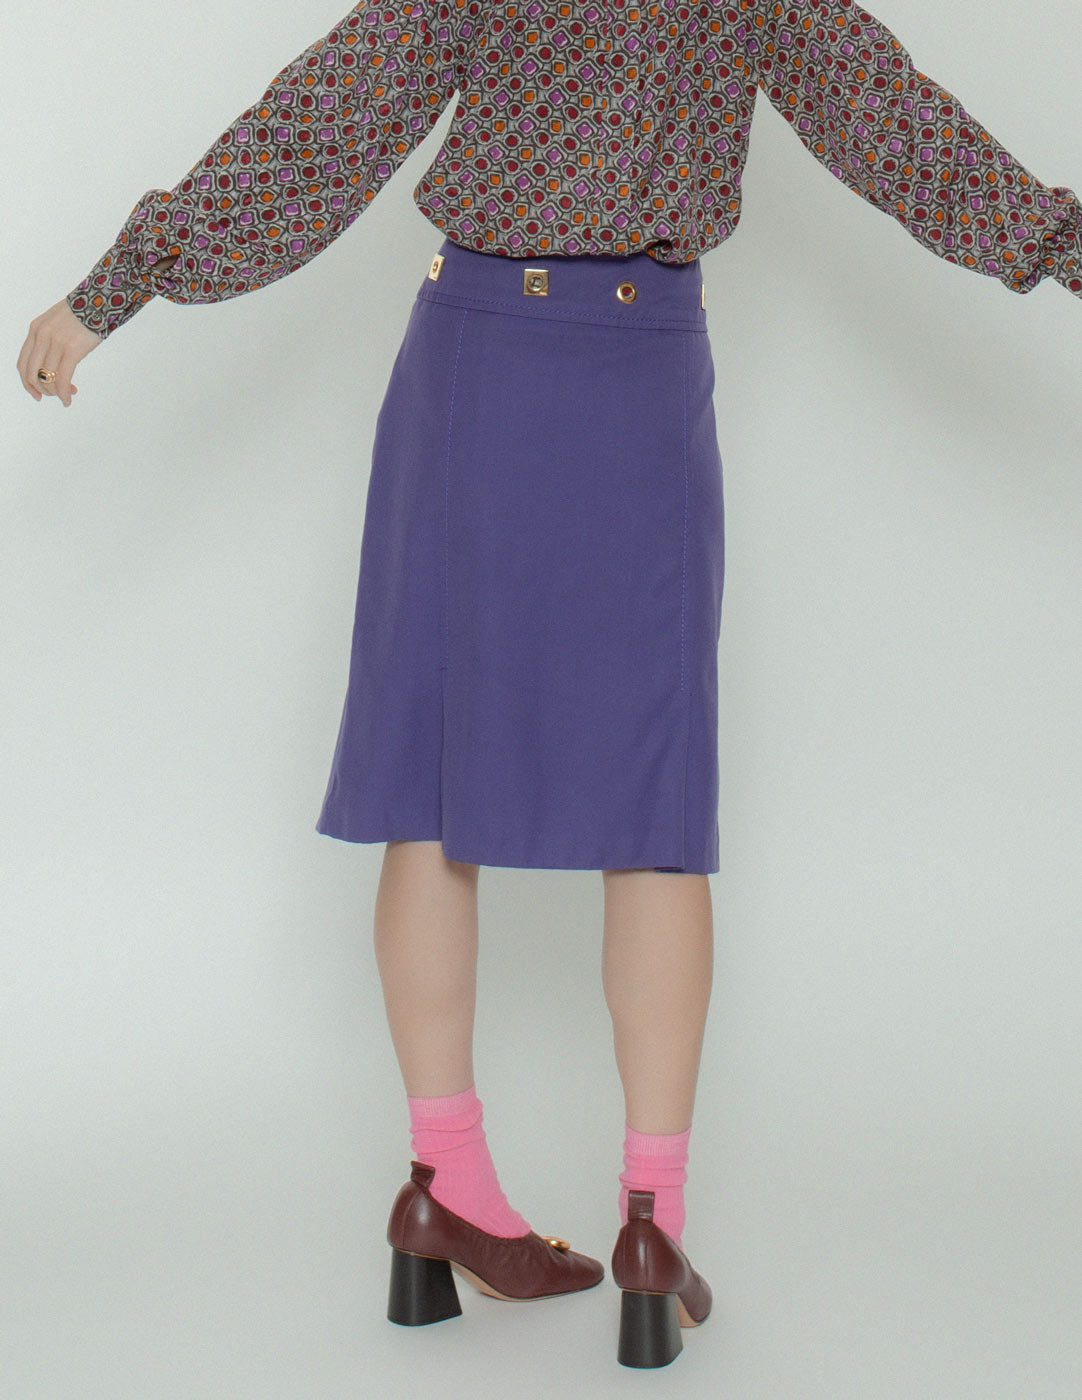 Fendi vintage purple wool skirt back detail